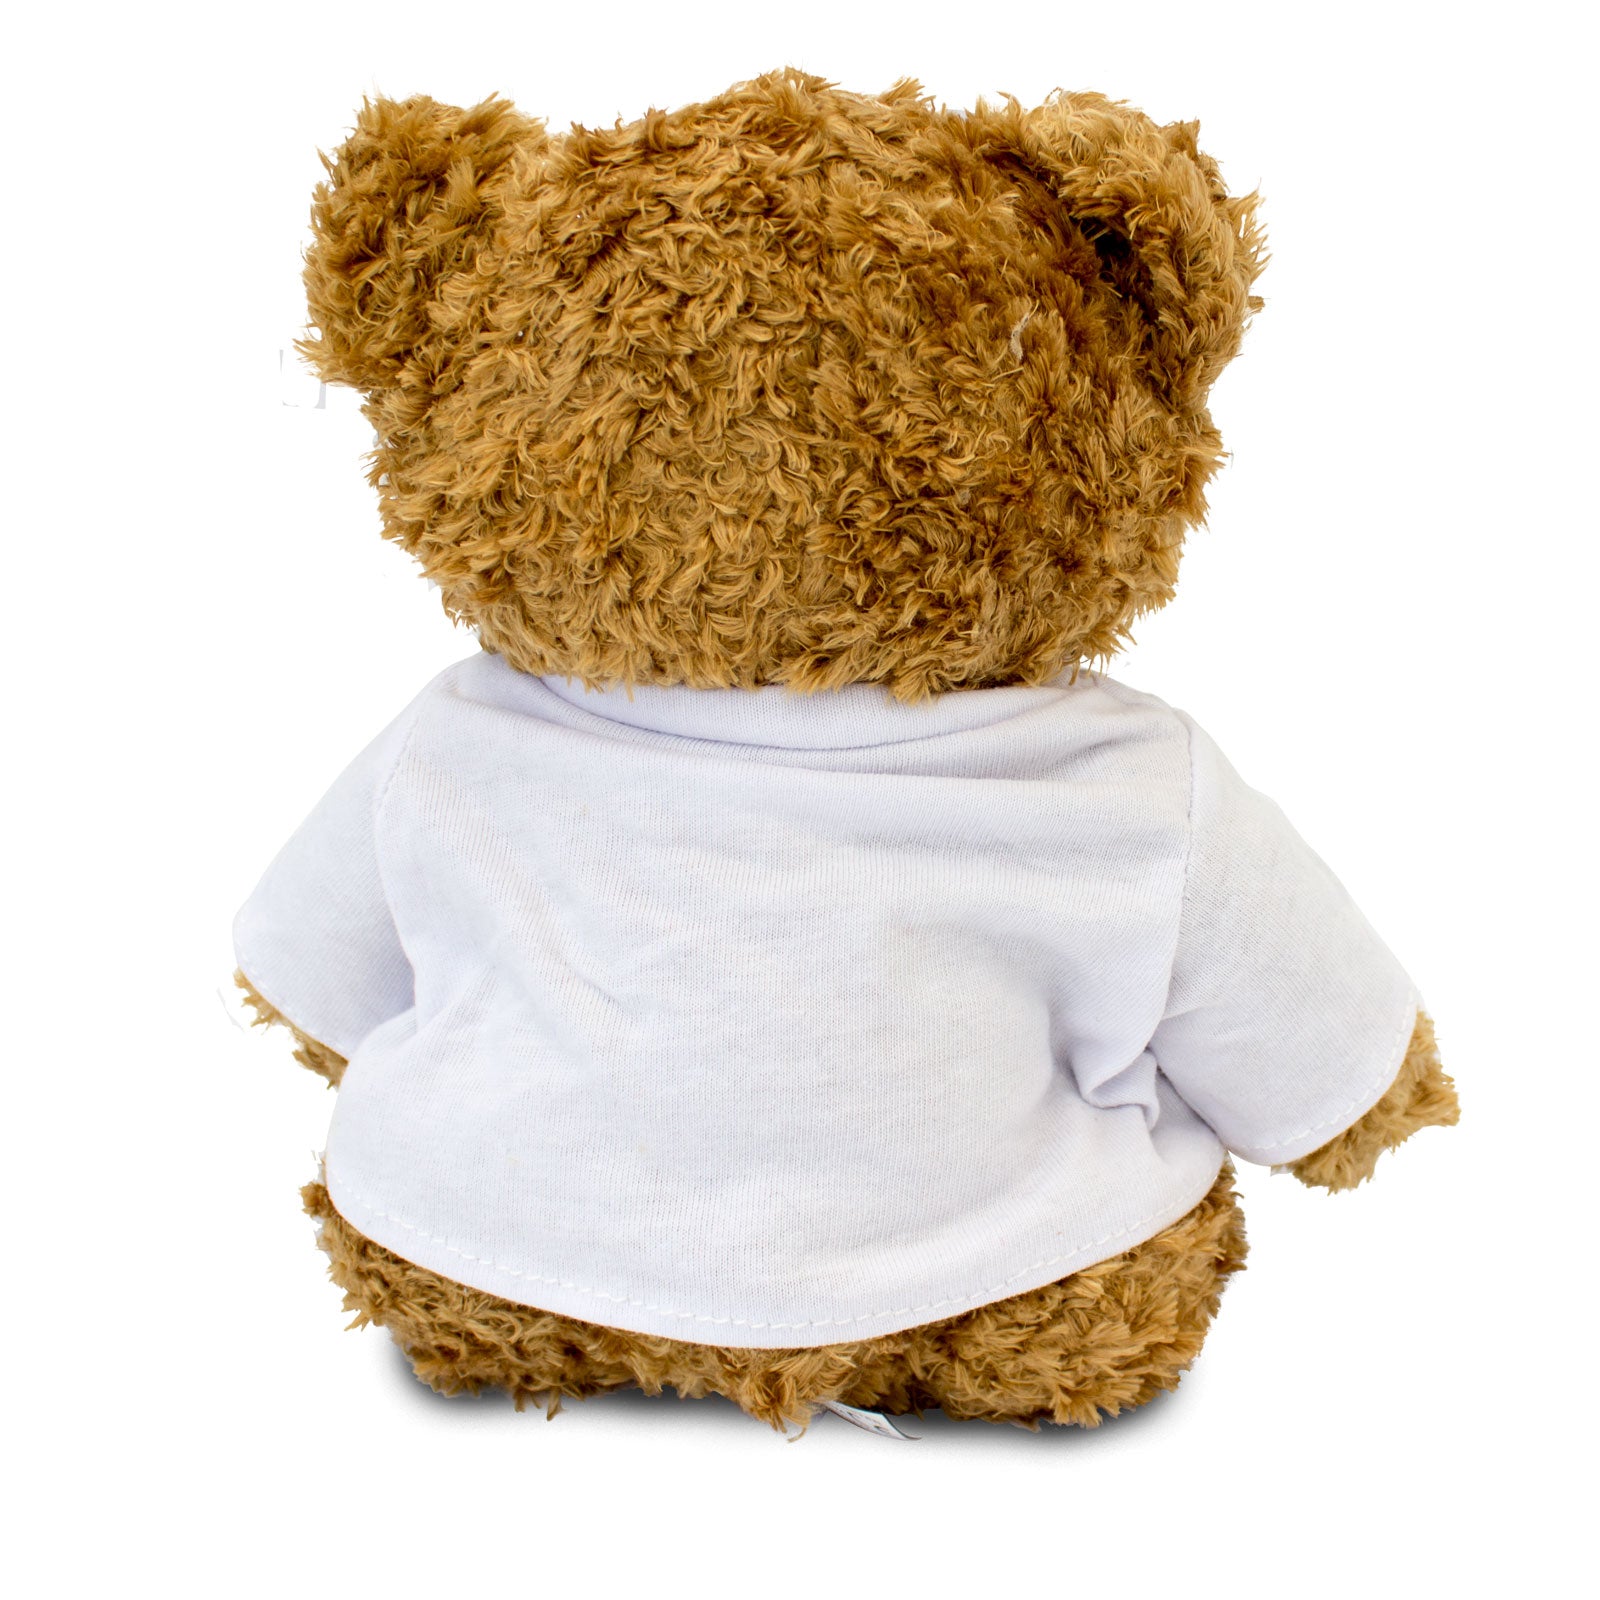 Get Well Soon Griffin - Teddy Bear